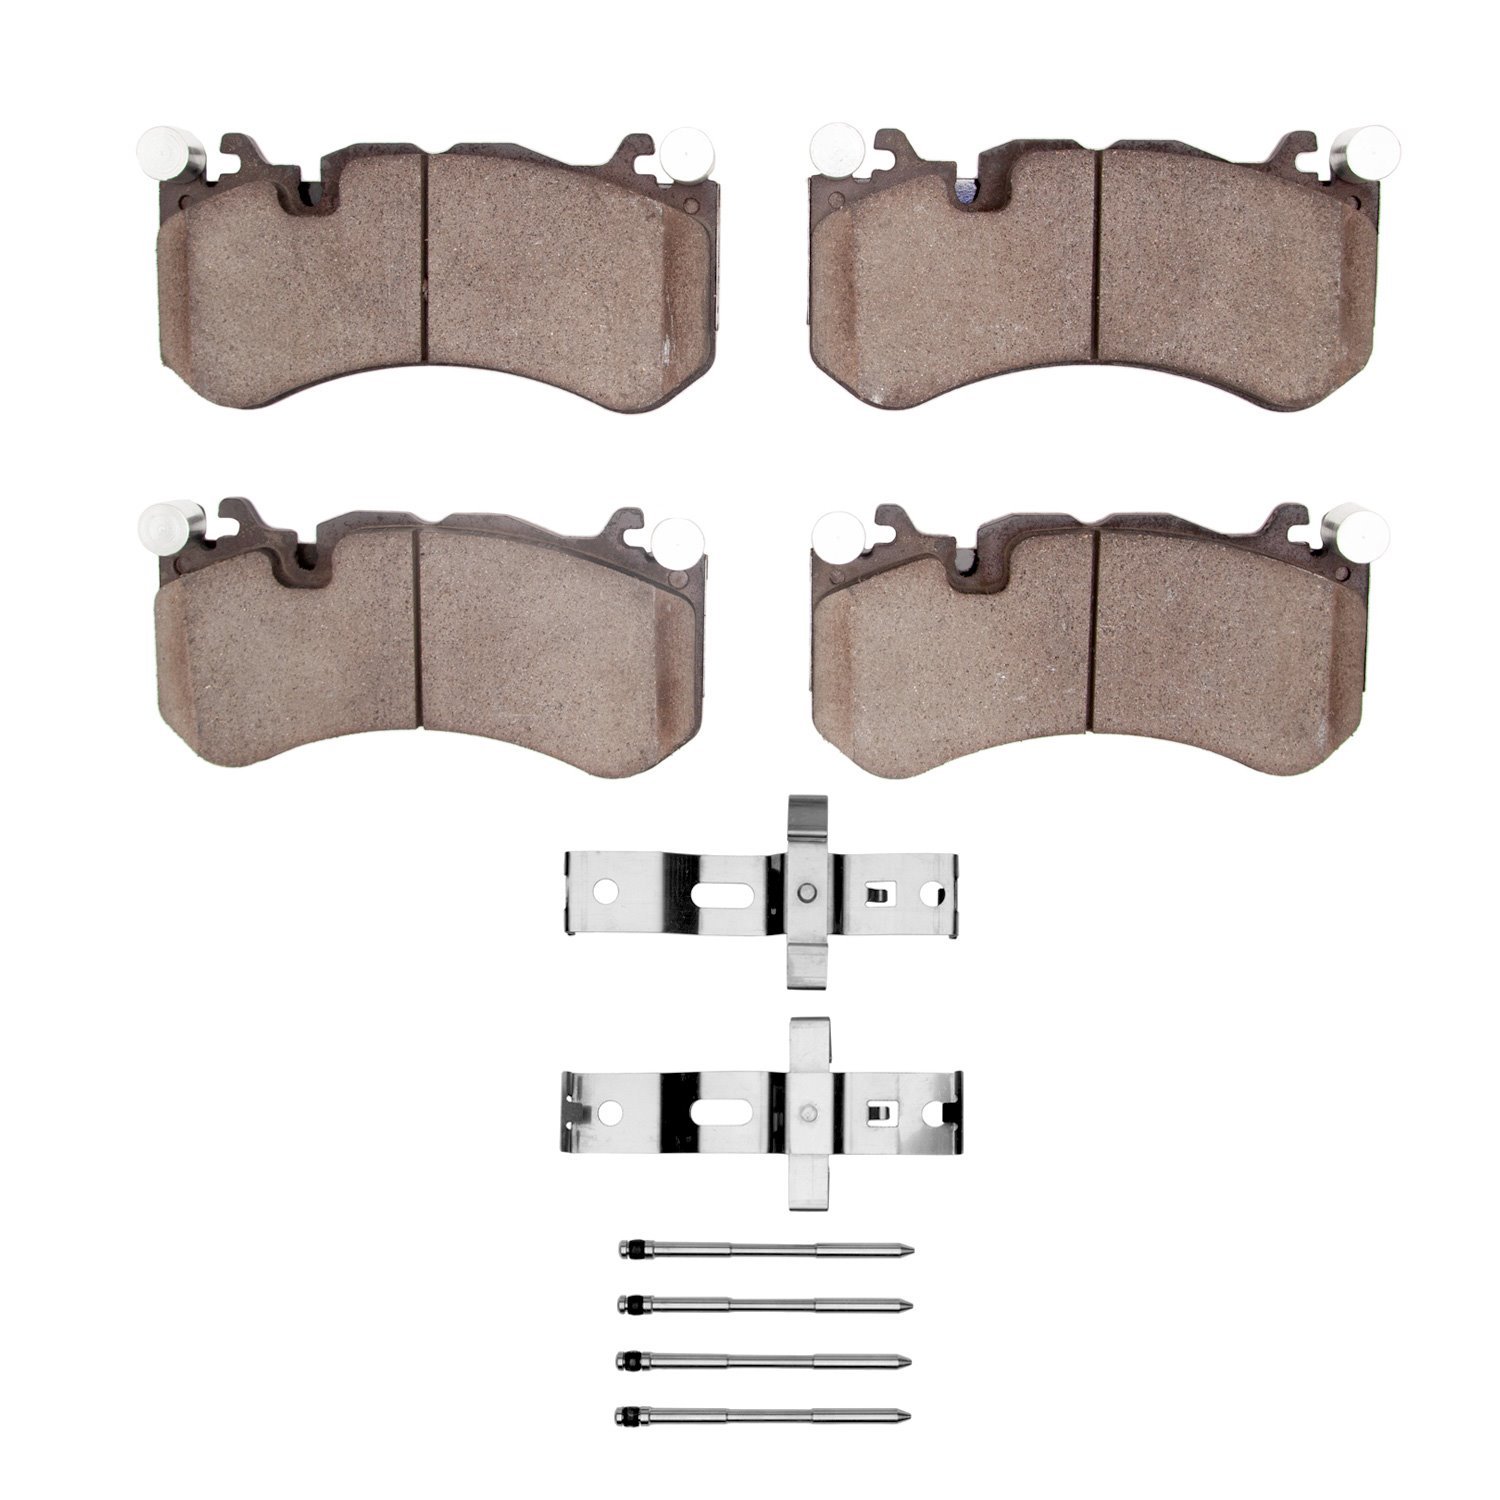 1600-1291-01 5000 Euro Ceramic Brake Pads & Hardware Kit, Fits Select Multiple Makes/Models, Position: Front